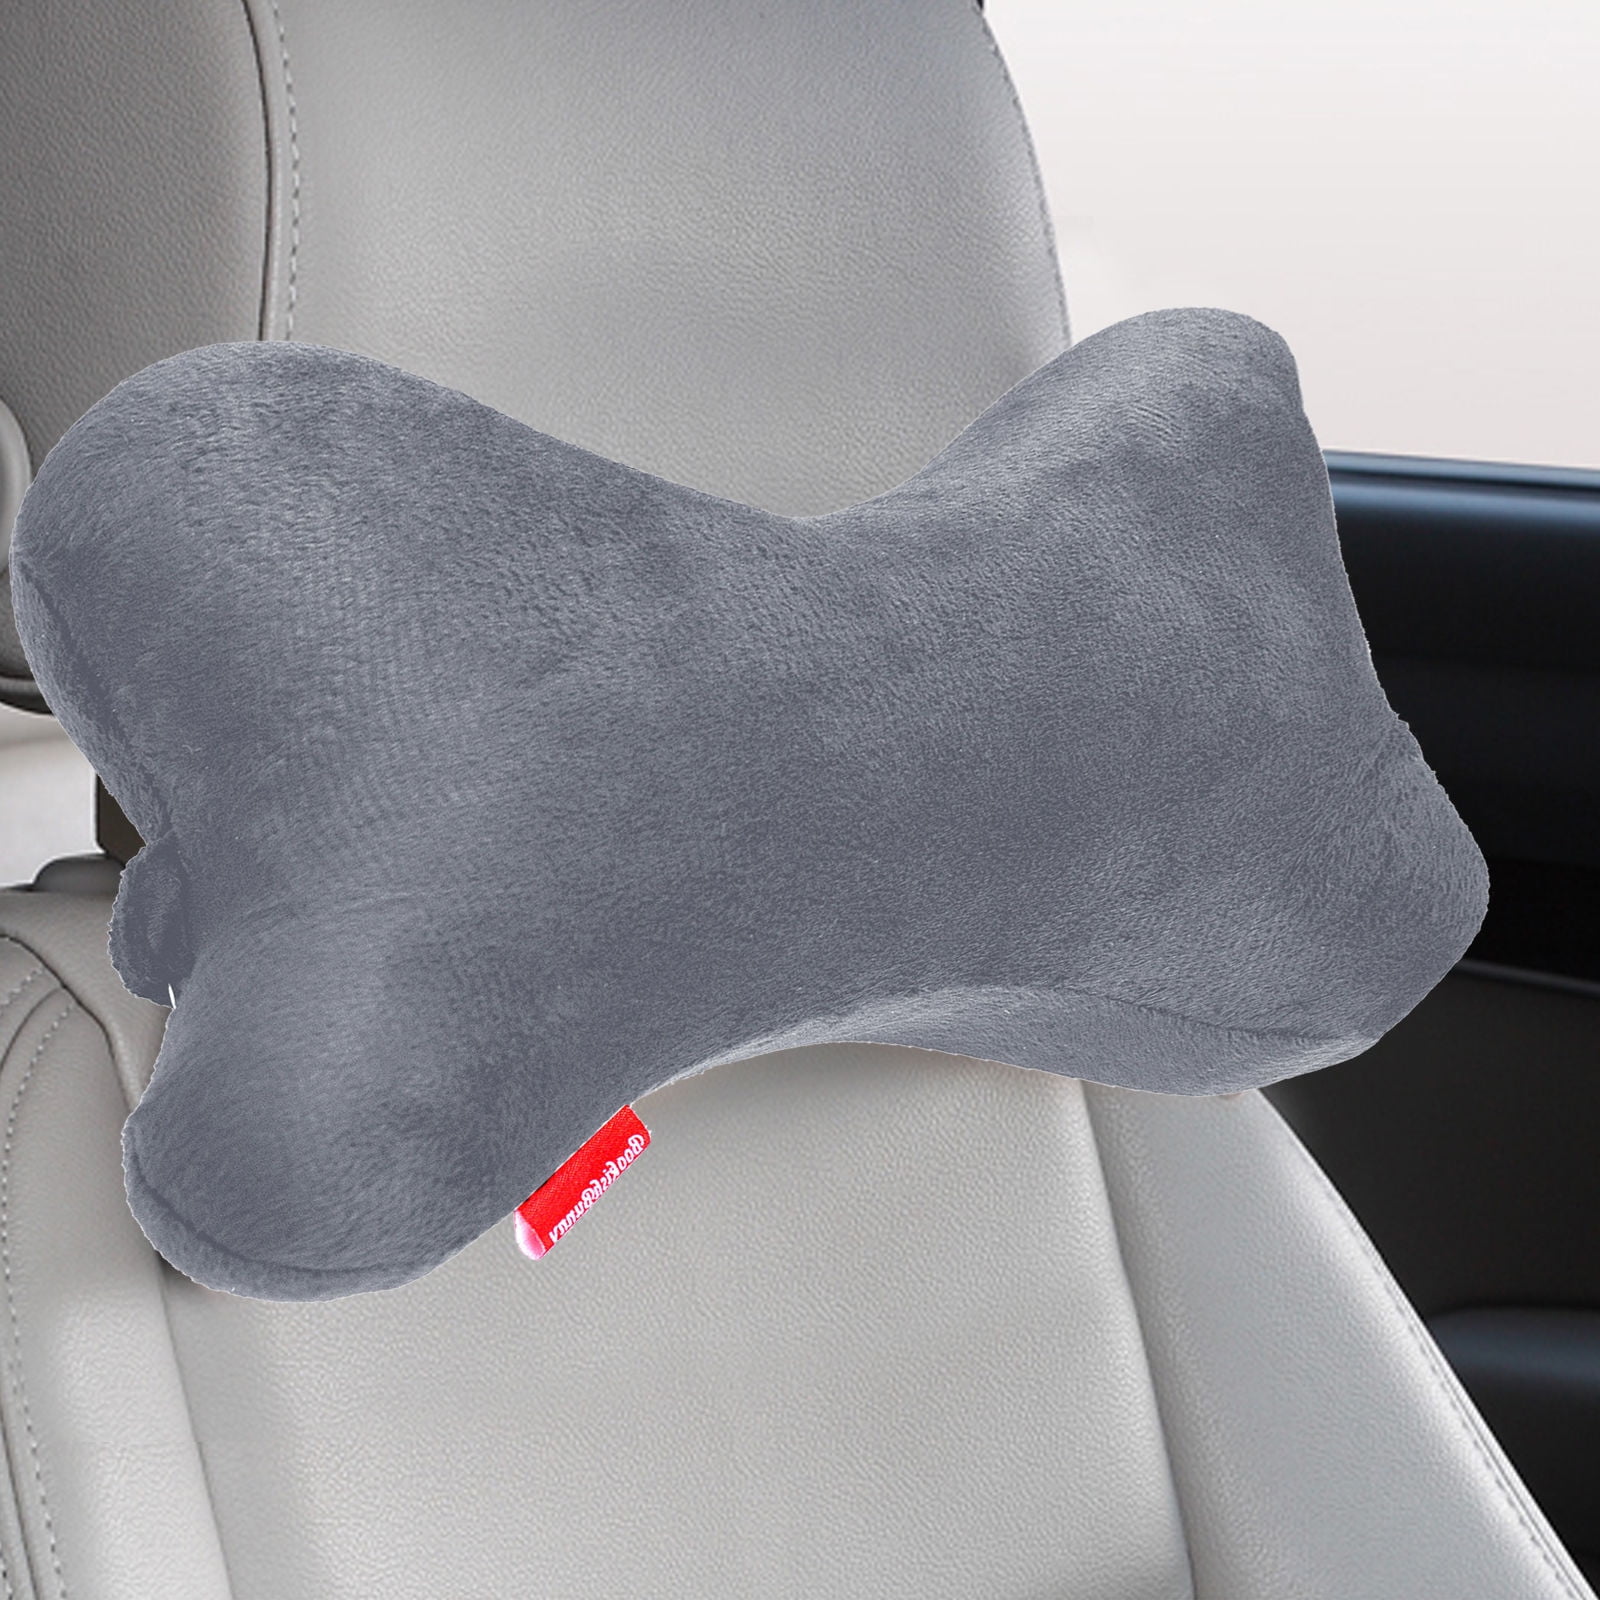 Car Seat Neck Pillow 100% Pure Memory Foam Neck Pillow with Breathable Removable Cover Payanwin Car Seat Headrest Neck Rest Cushion Comfortable Ergonomic & Neck Pain Relief Black 